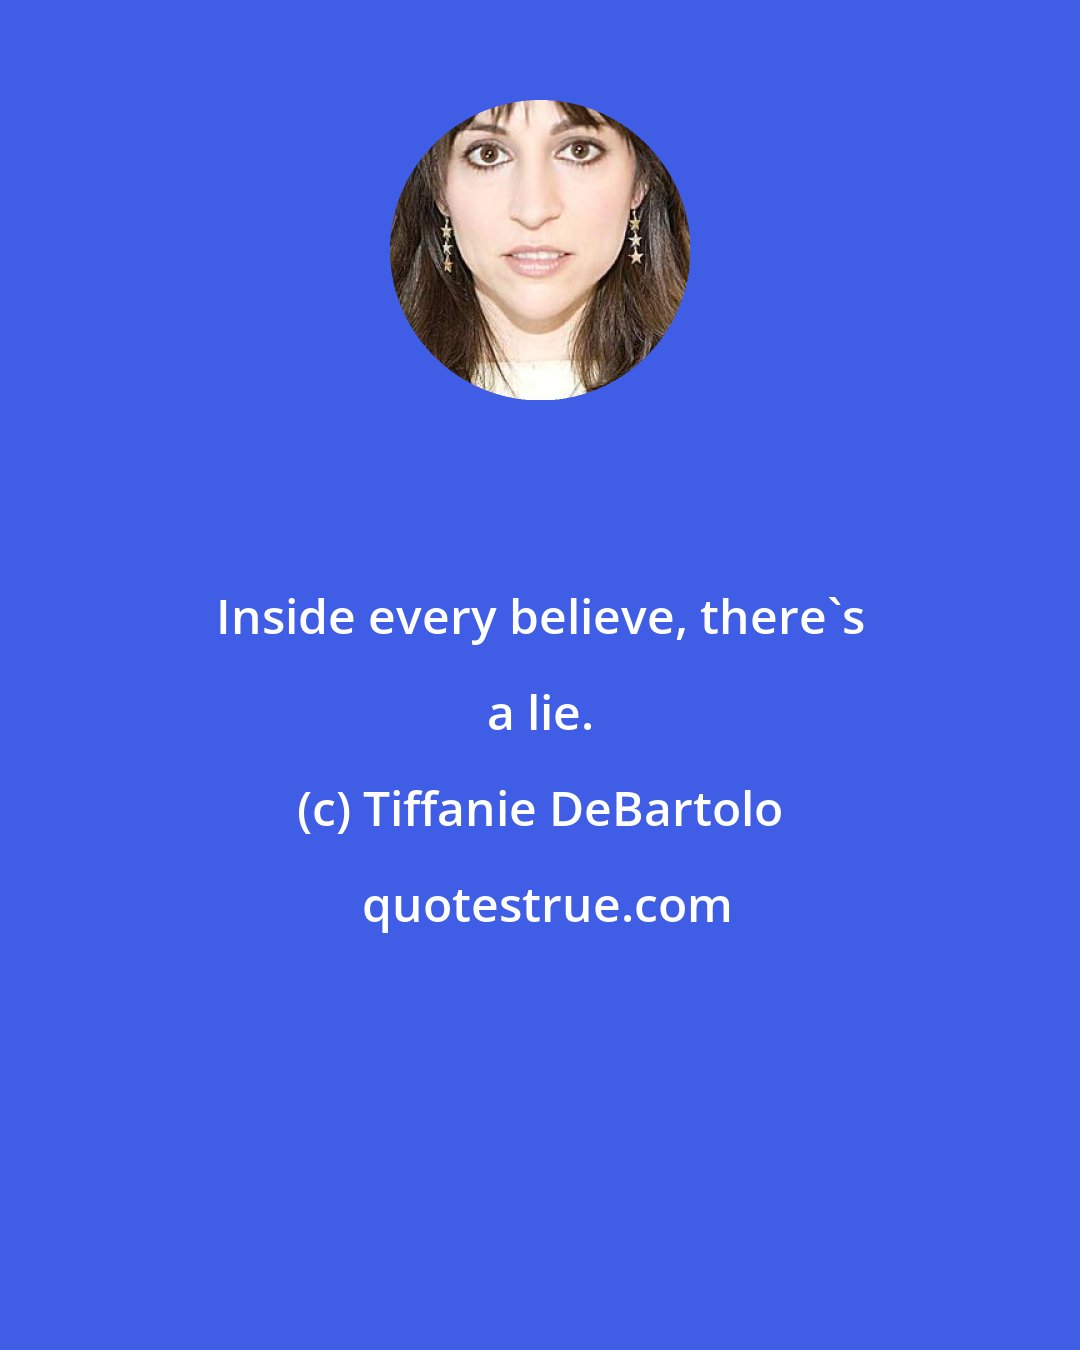 Tiffanie DeBartolo: Inside every believe, there's a lie.